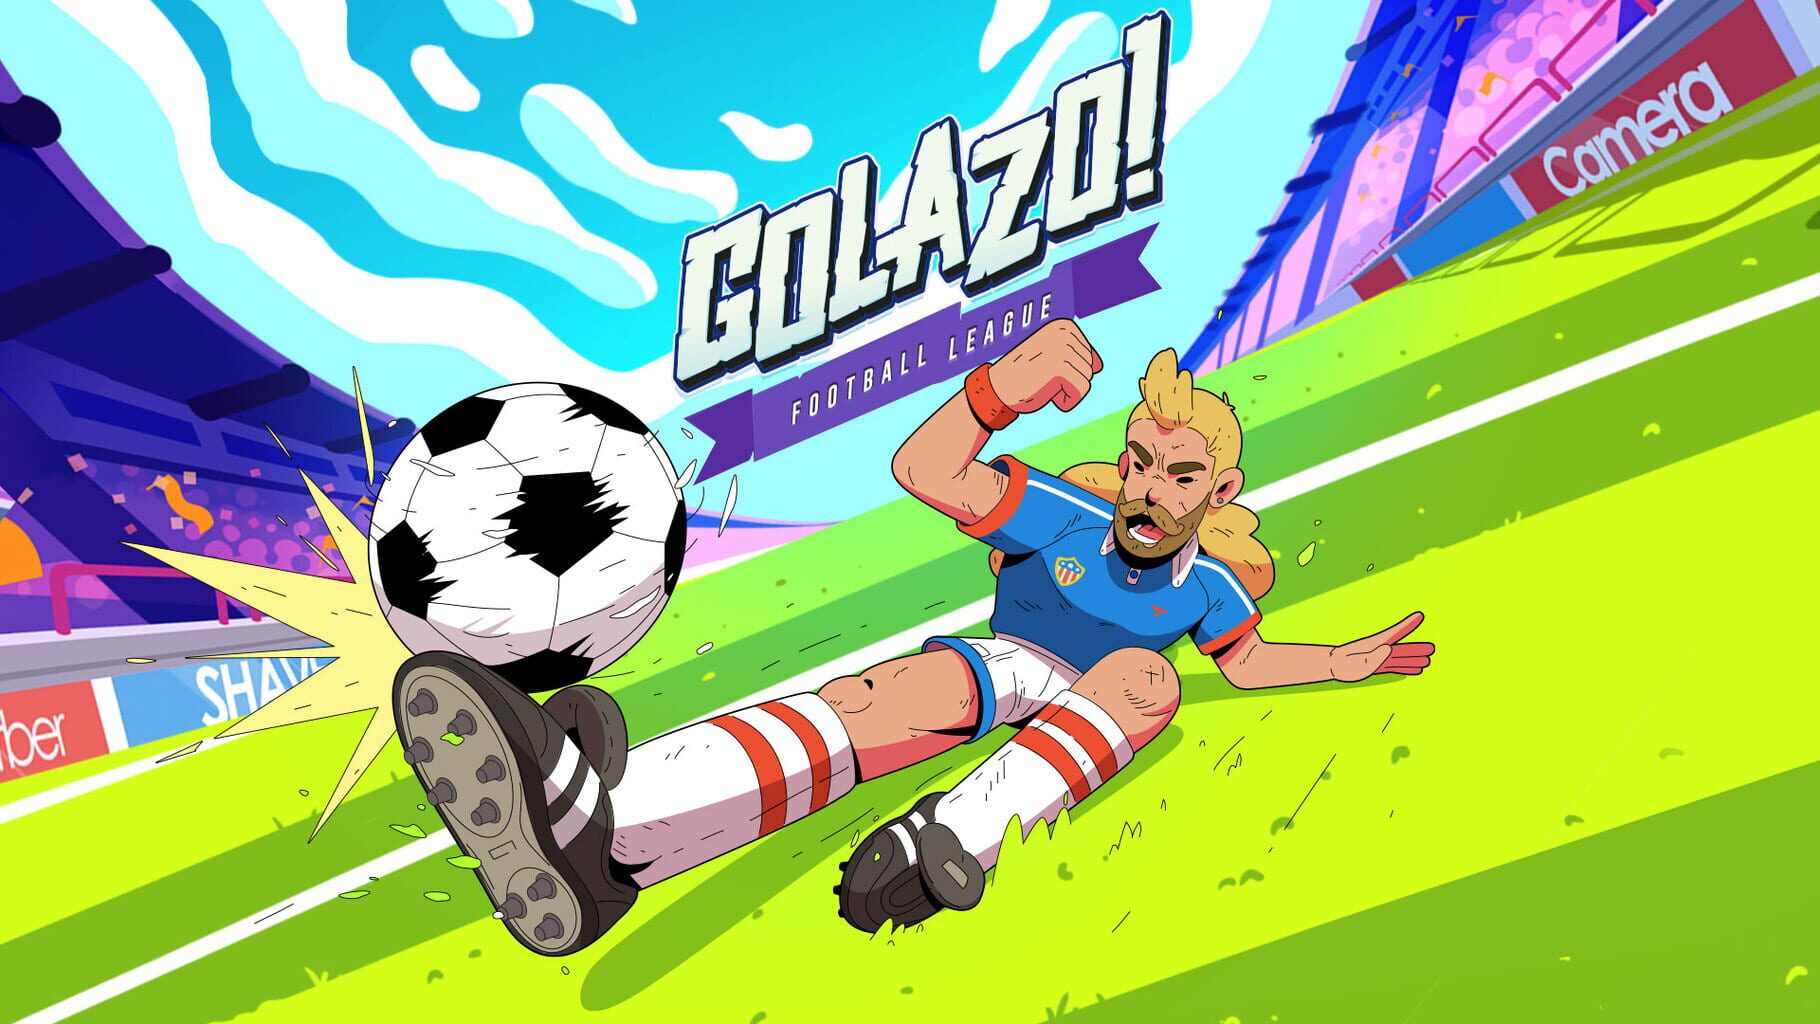 Golazo! artwork